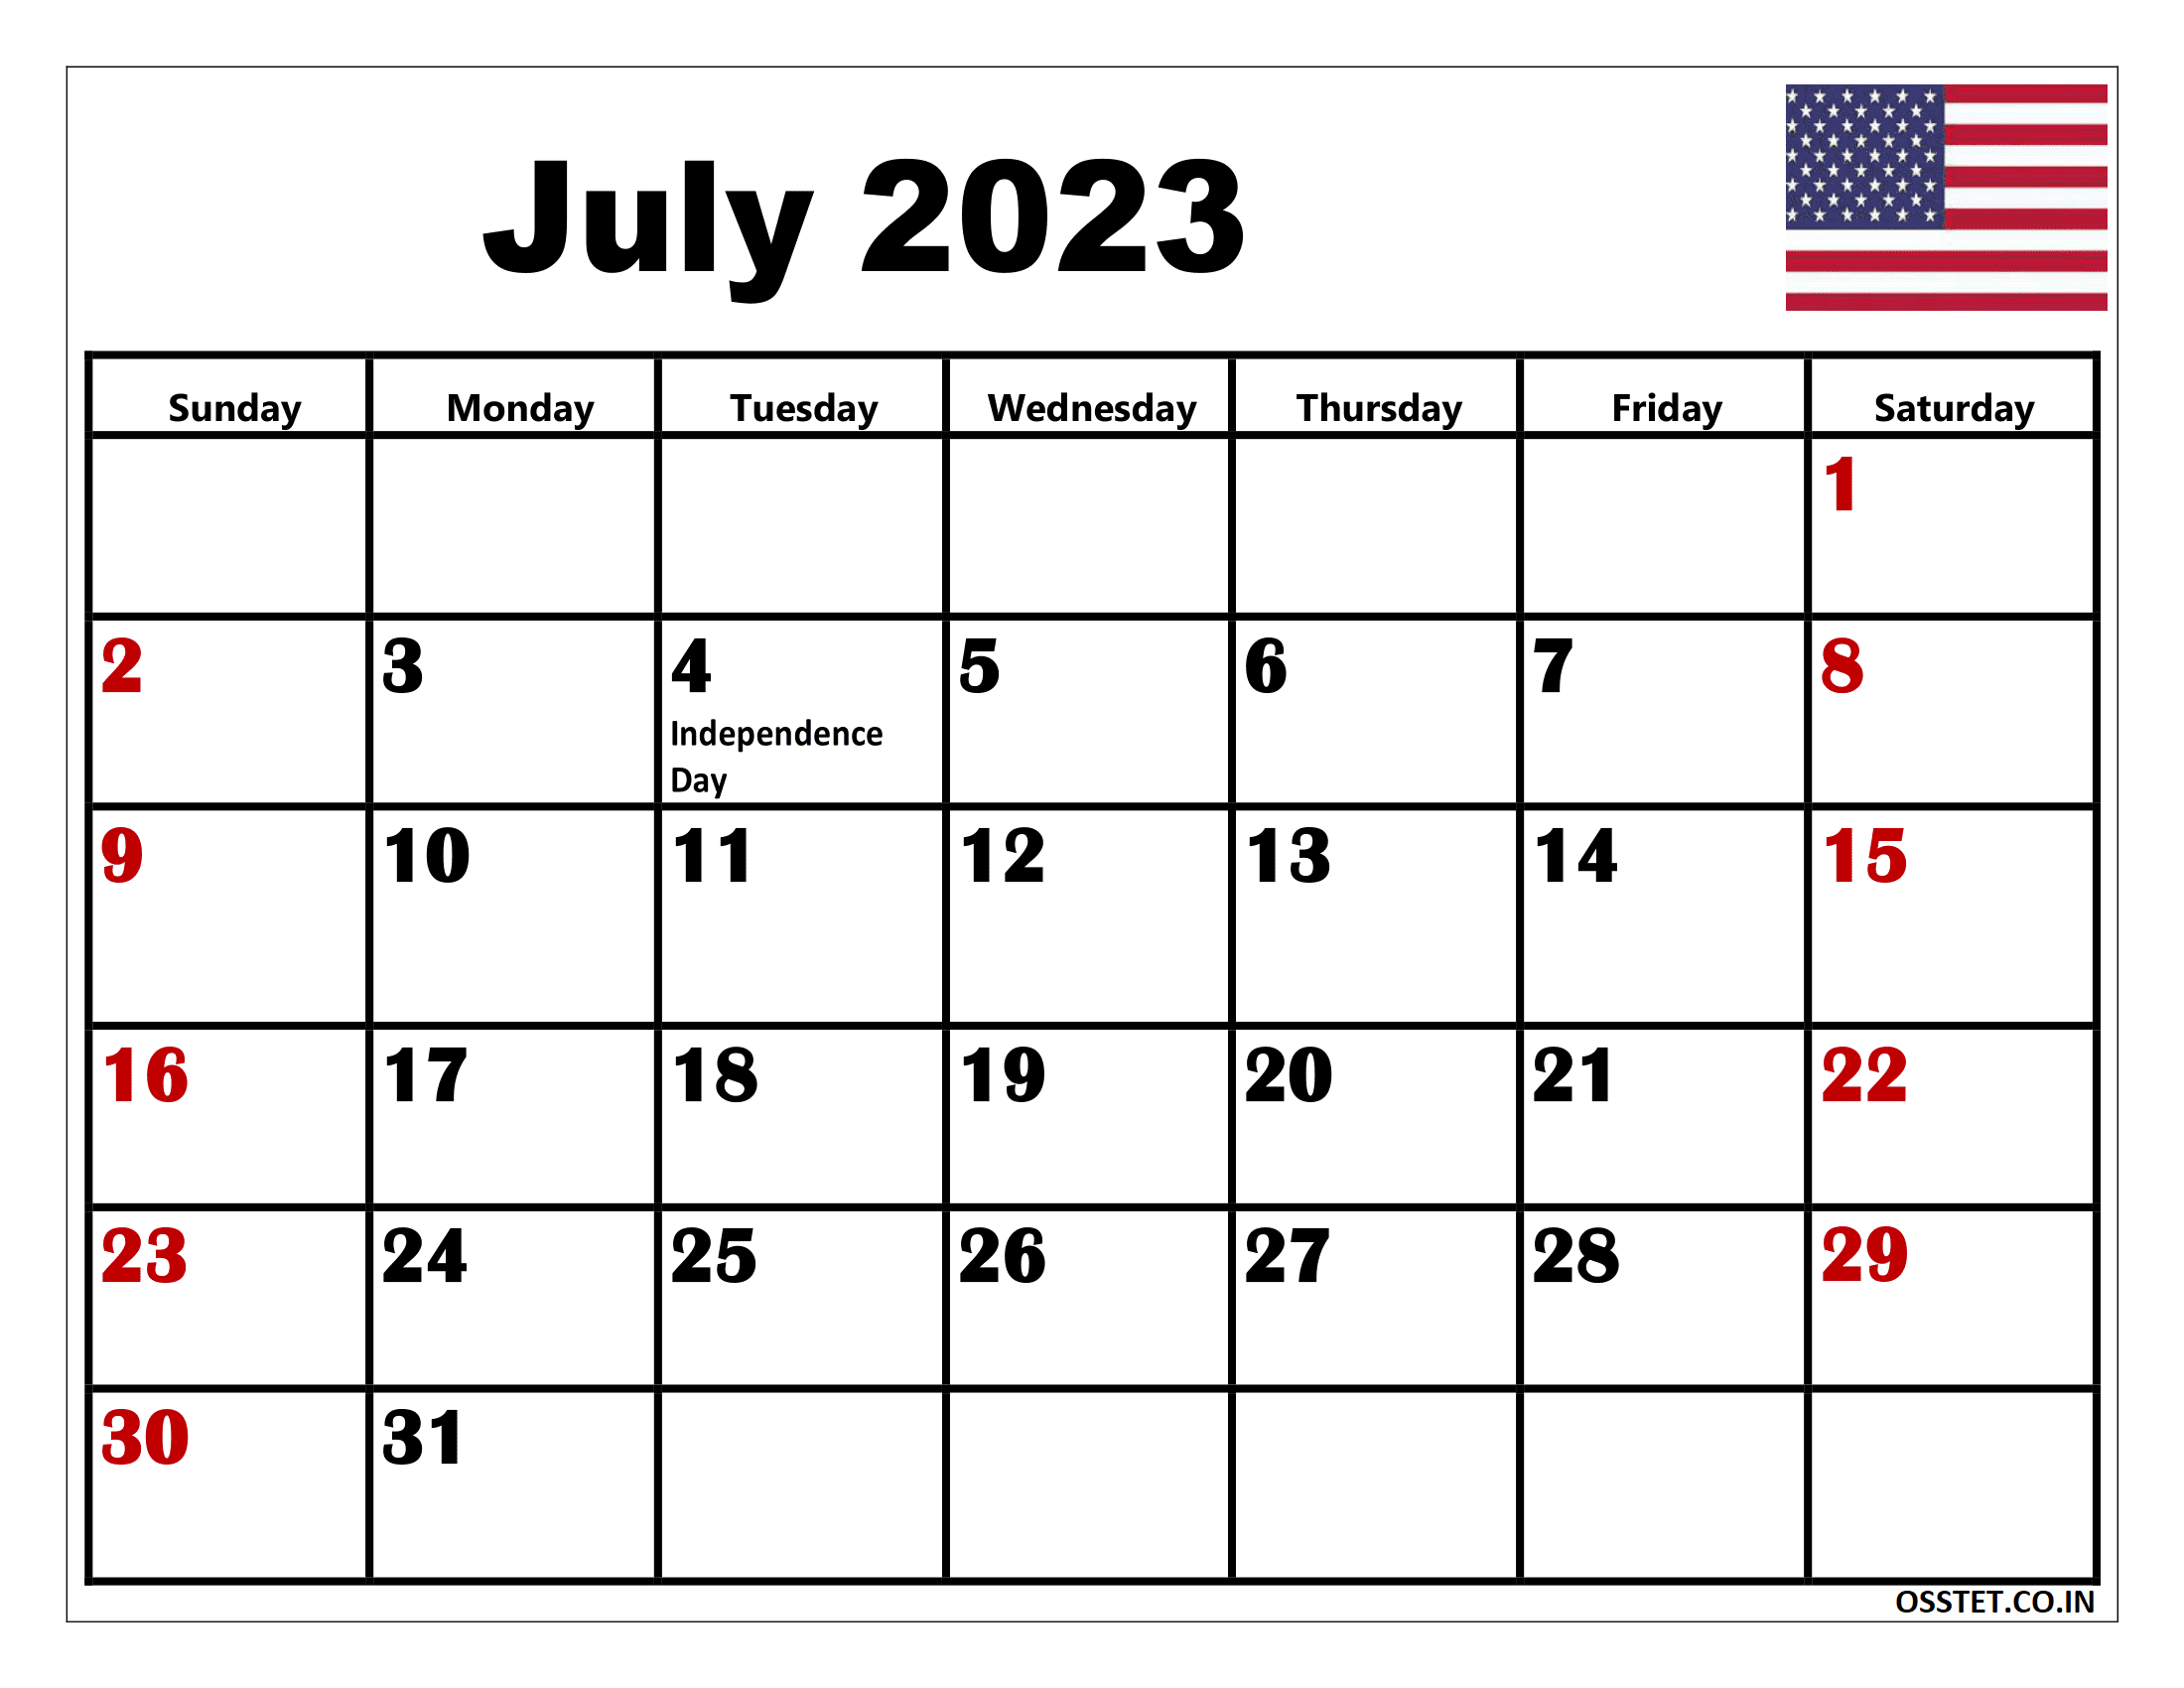 July 2023 Calendar with USA Holidays